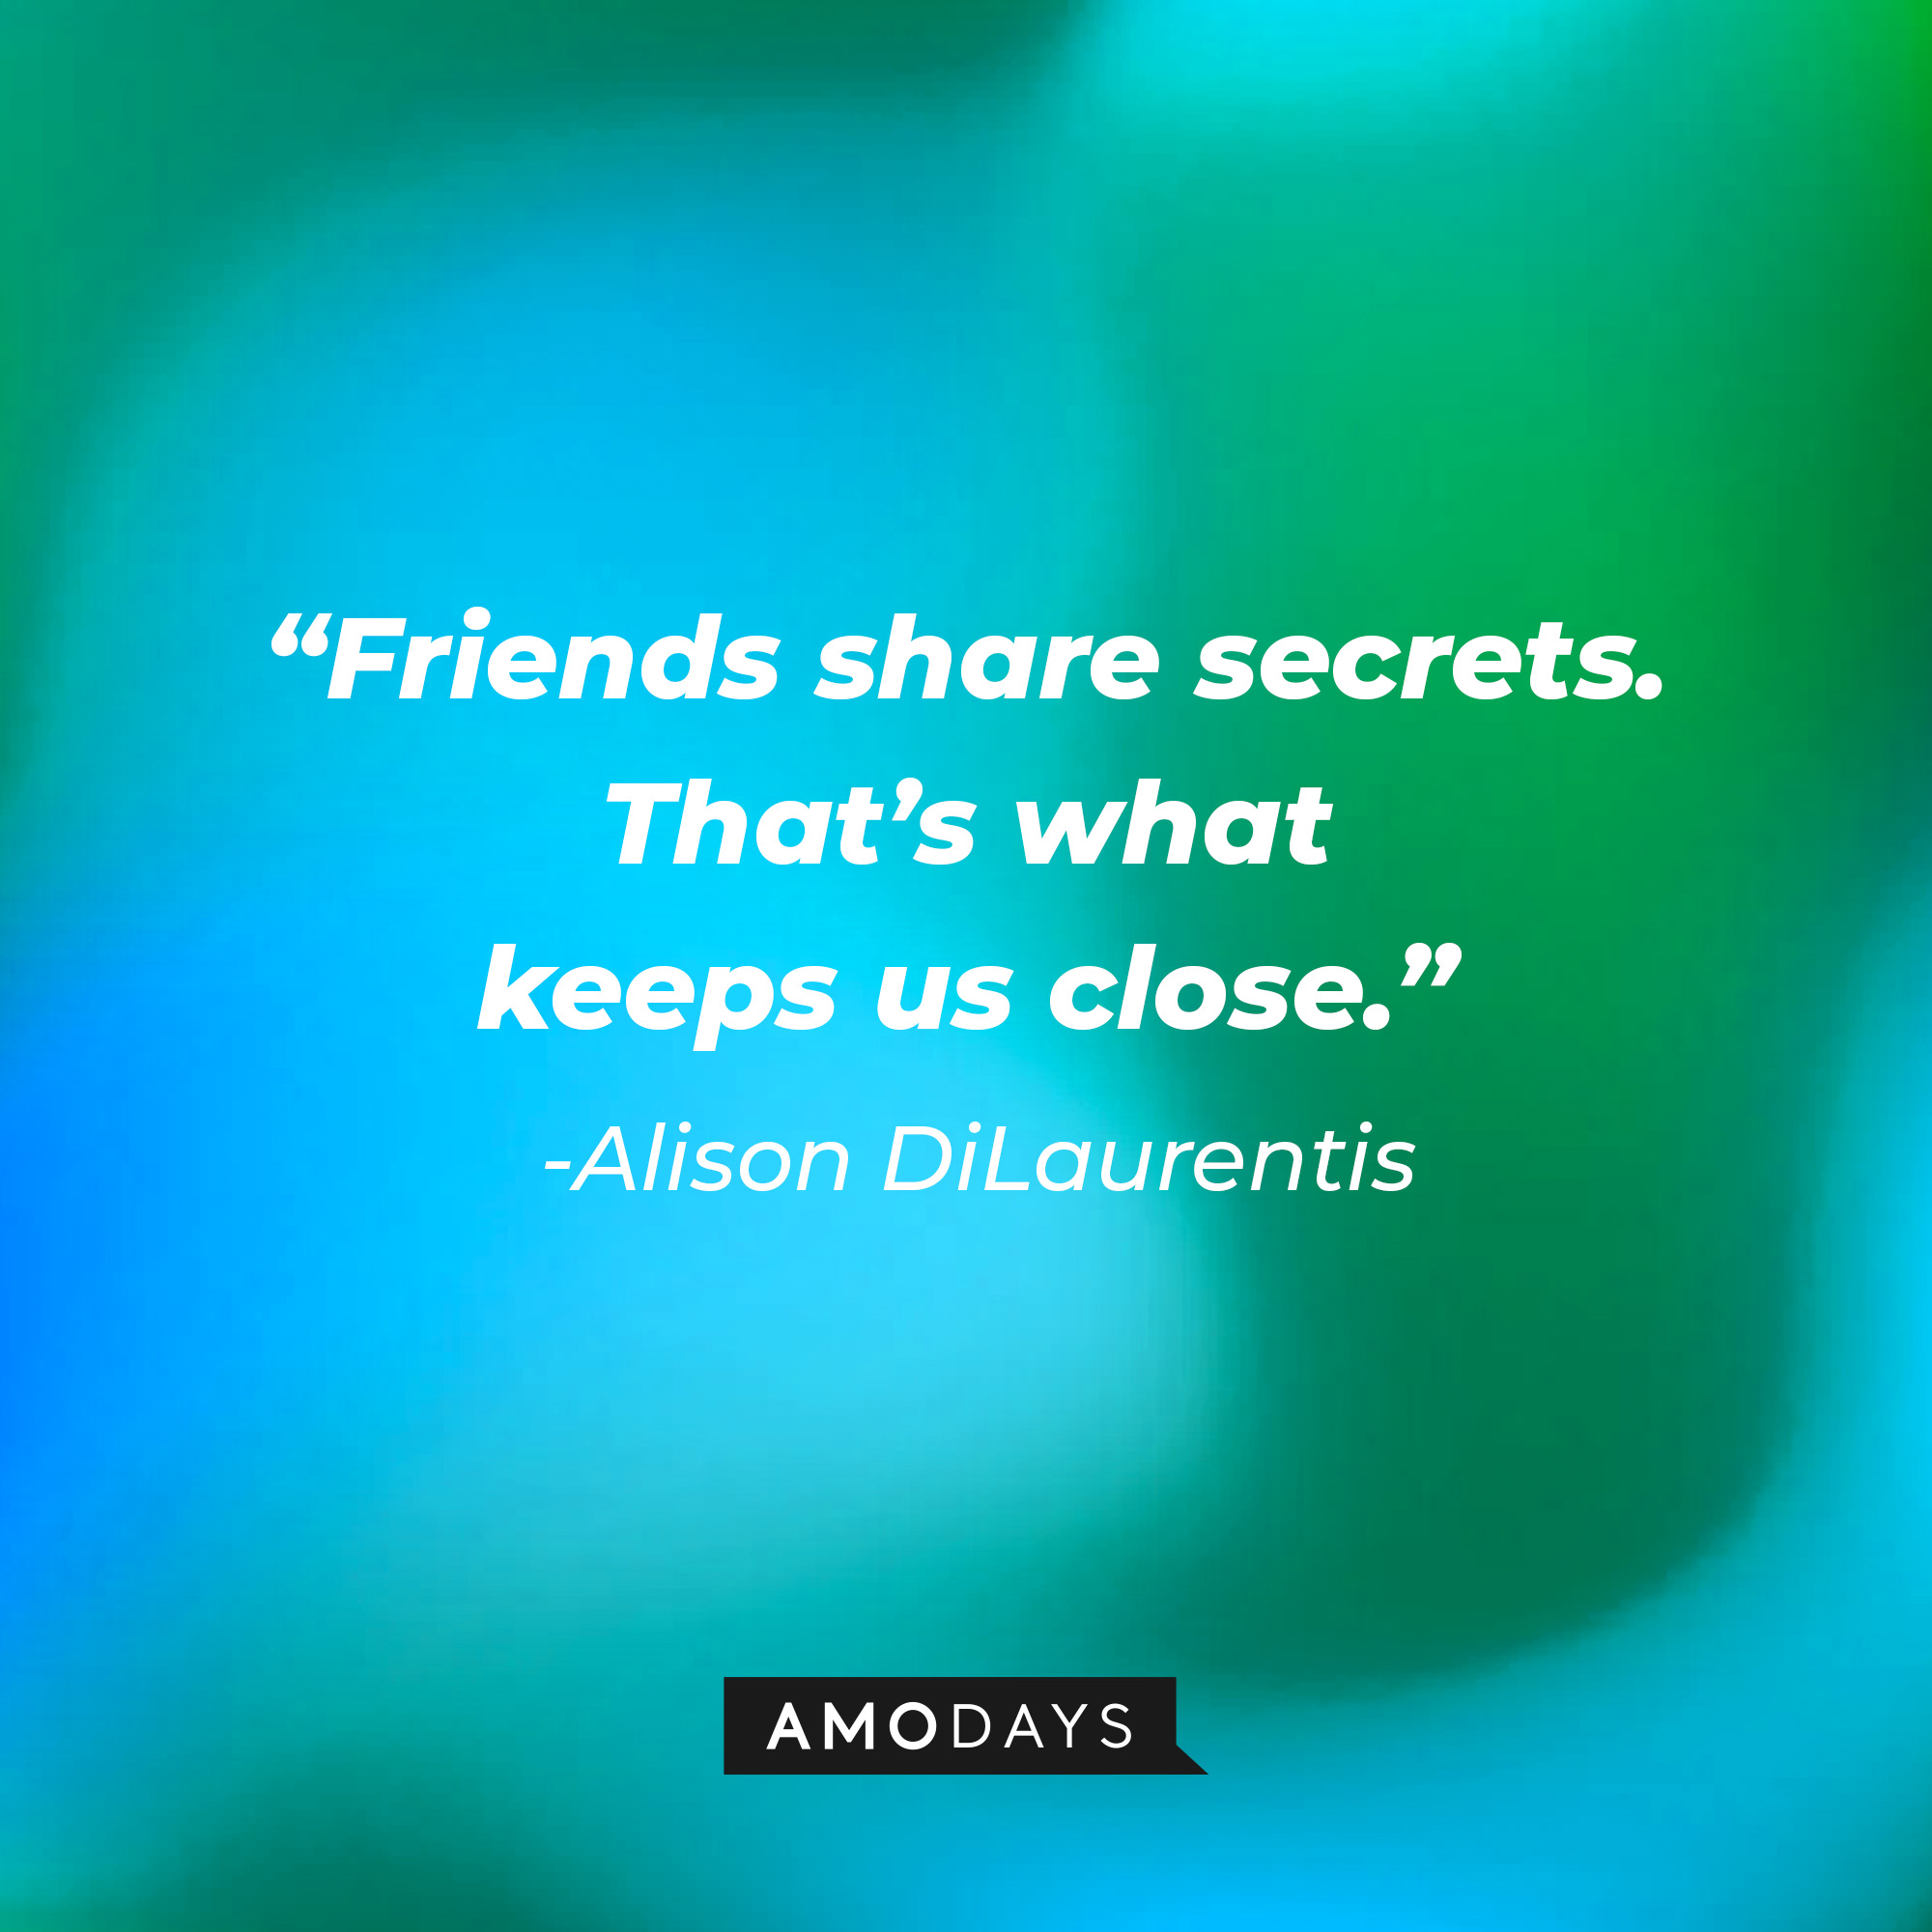 Alison DiLaurentis' quote: "Friends share secrets. That's what keeps us close." | Source: Amodays